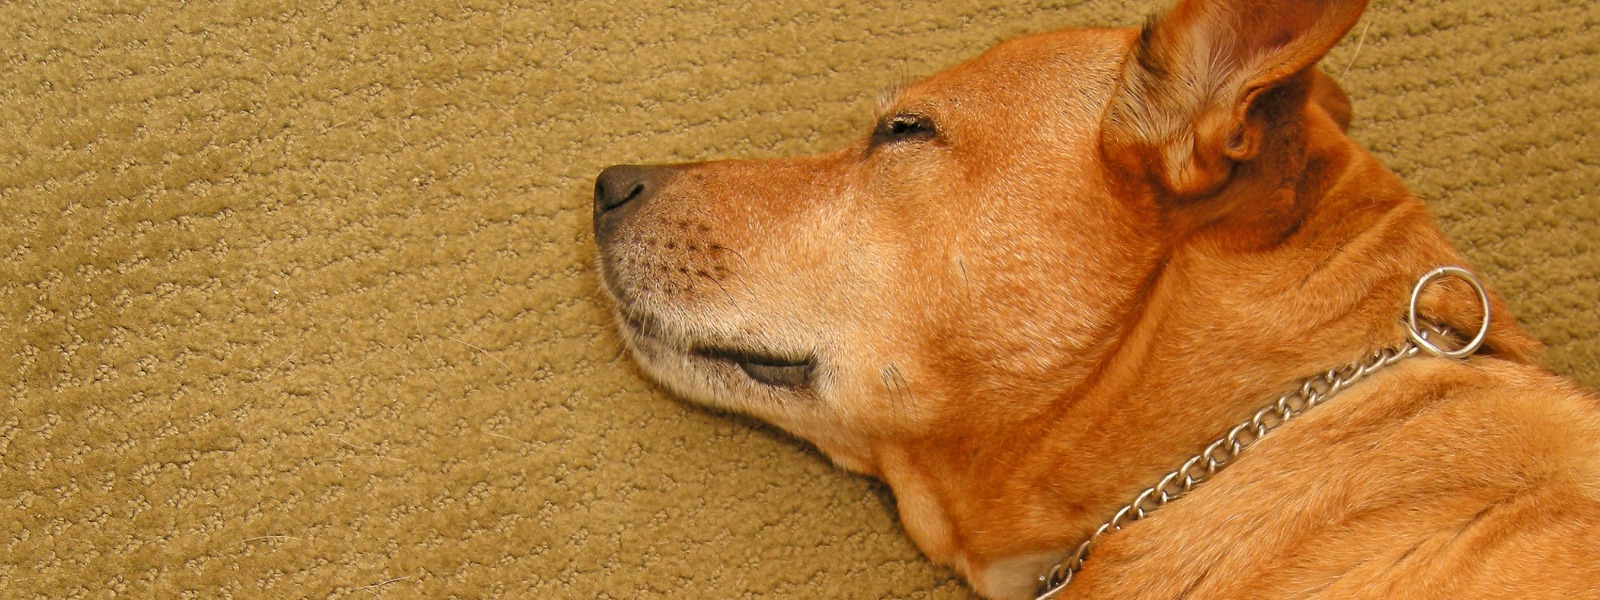 Sleeping Dog on Textured Carpet